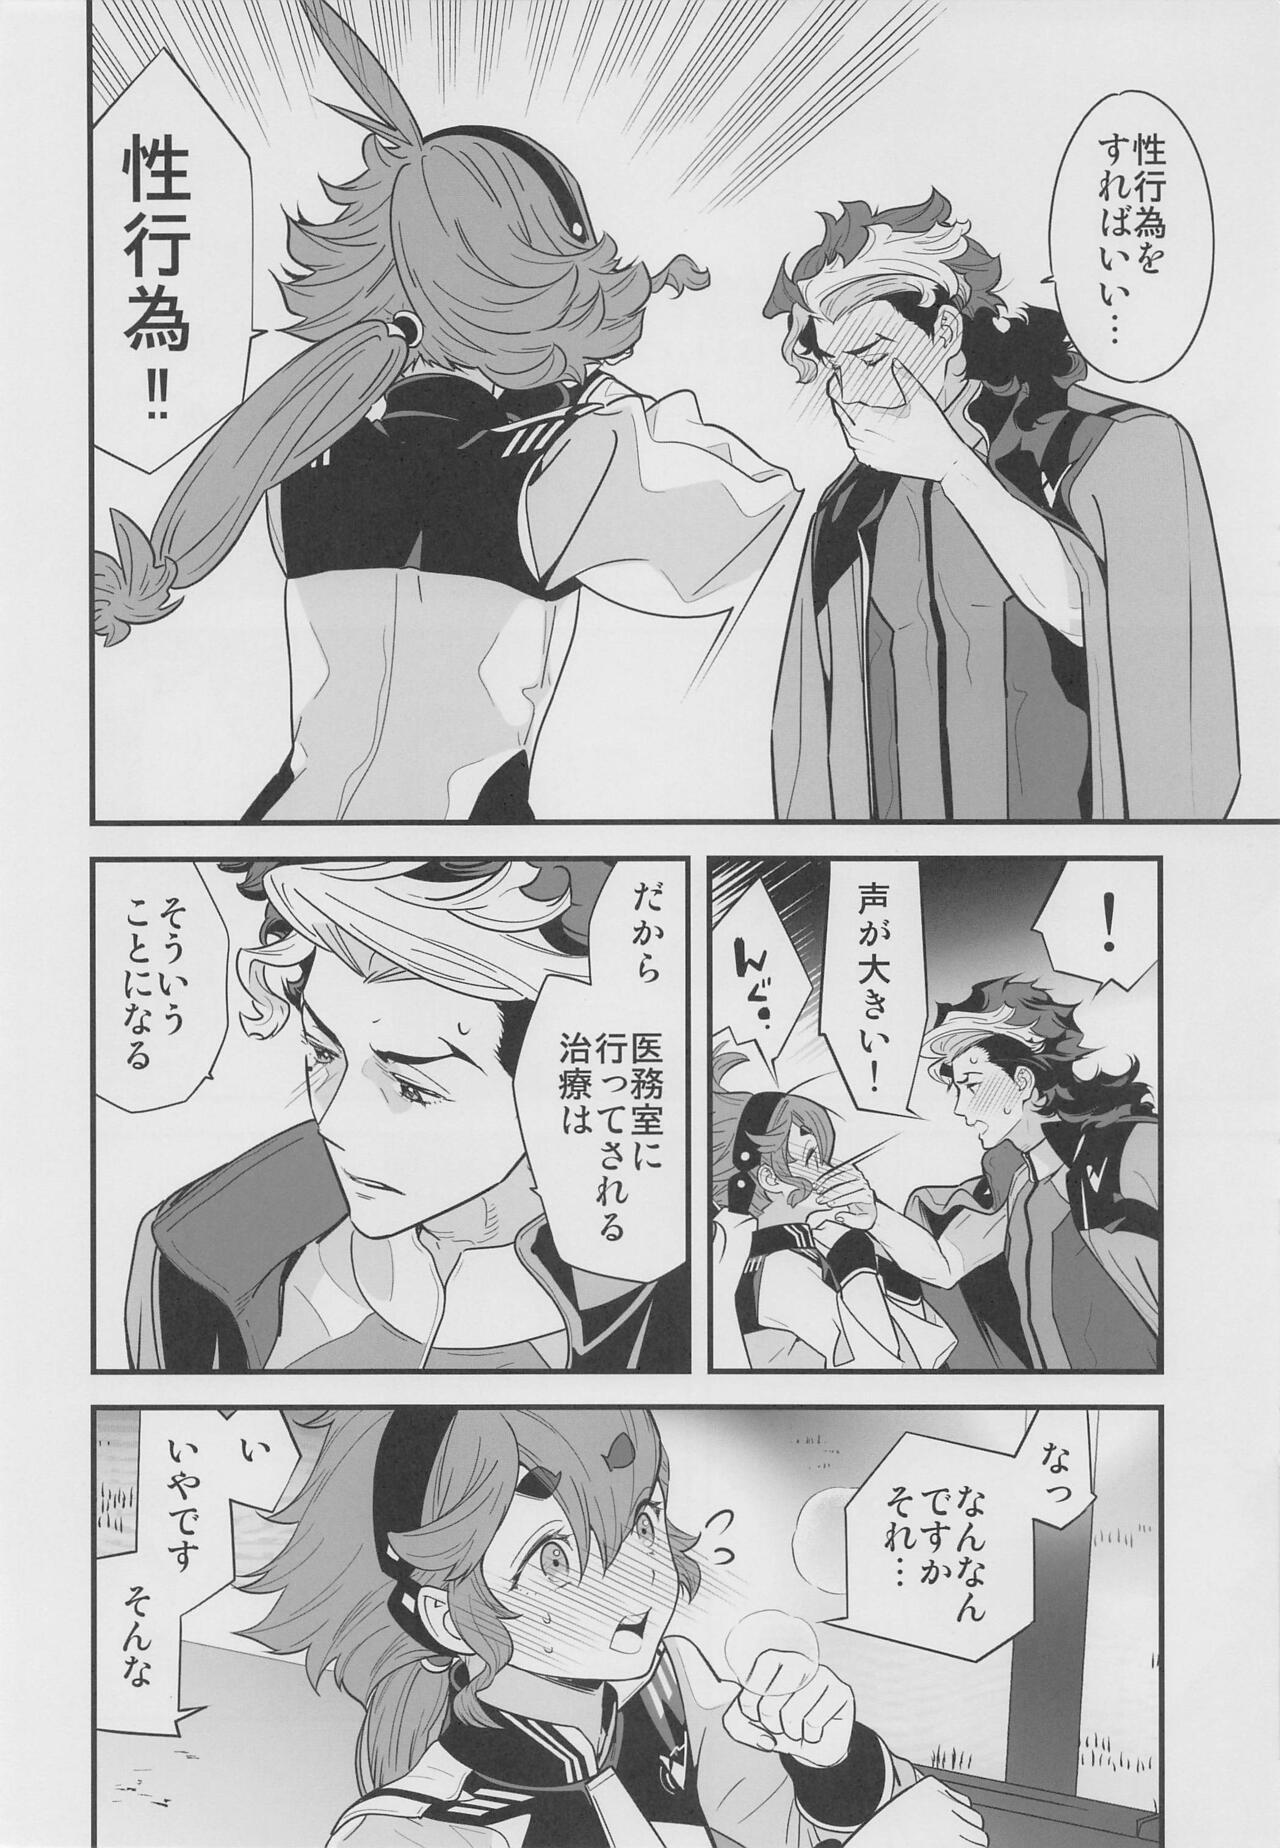 Naija koreraiburarideichimankaimitayatsudesu! - Mobile suit gundam the witch from mercury Safado - Page 7